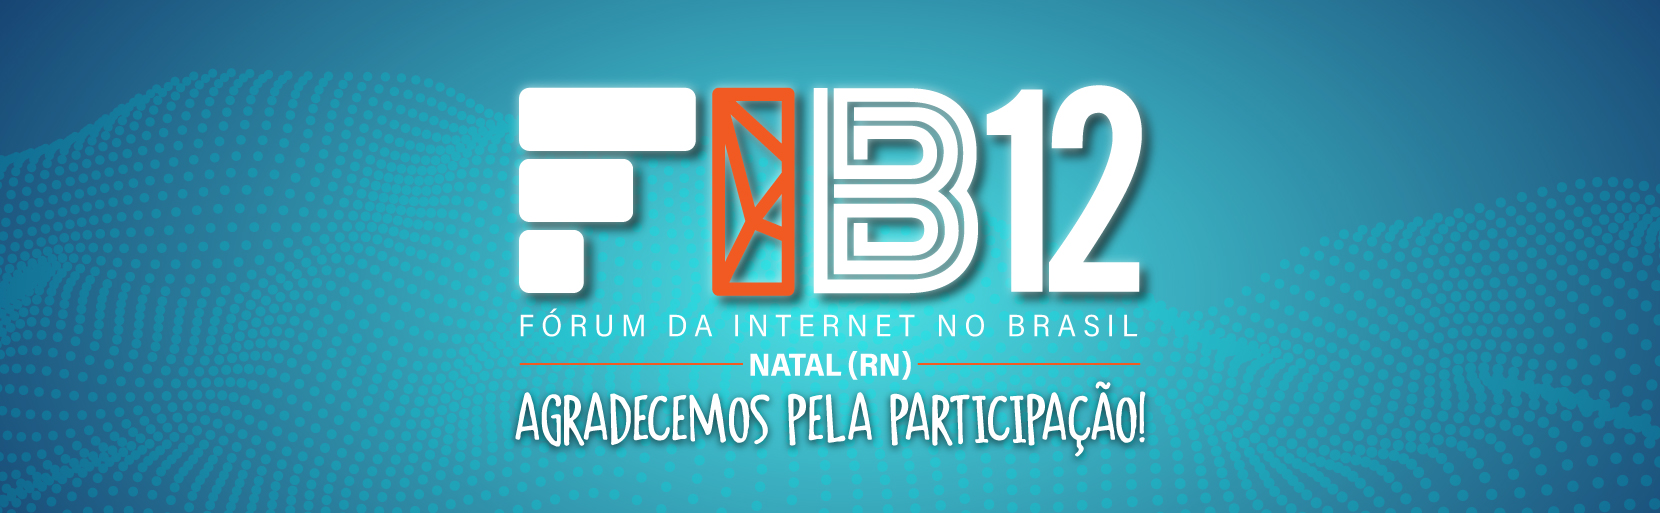 Banner FIB 12 - Fórum da Internet no Brasil